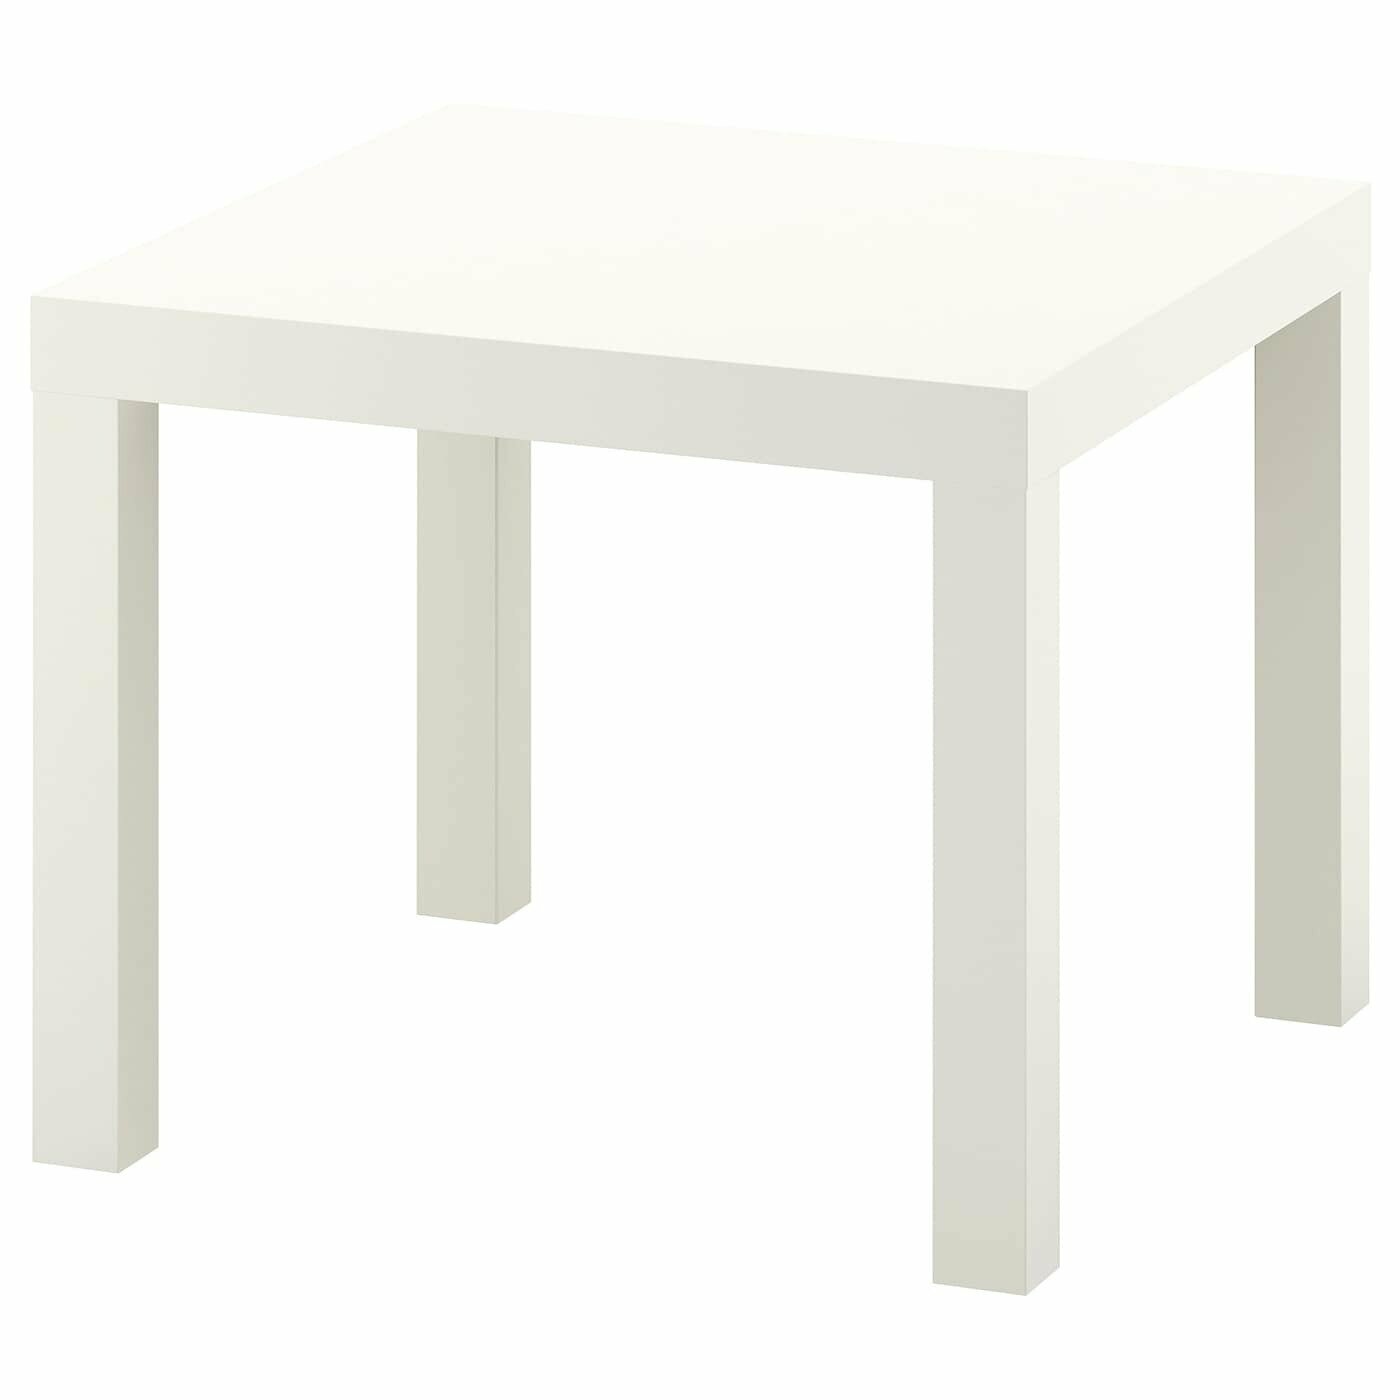 Придиванный столик икеа ЛАКК (IKEA LAKK), 55x55 см, белый